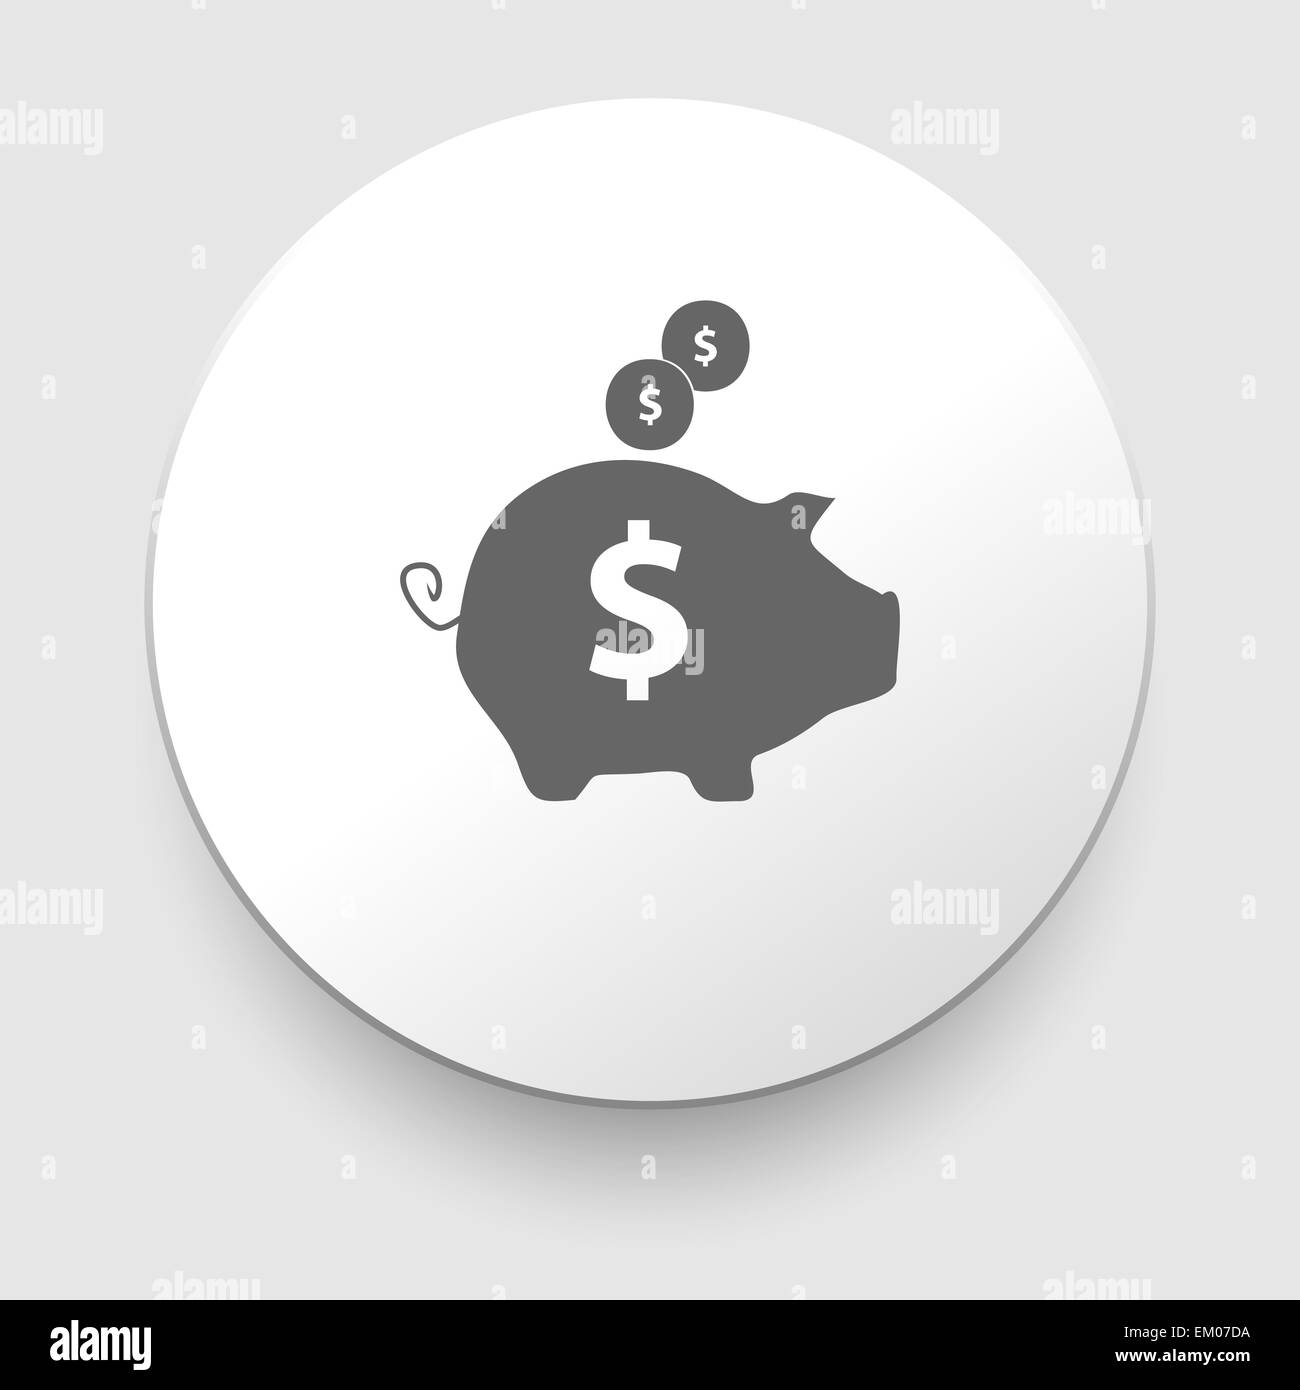 save money vector illustration Stock Photo